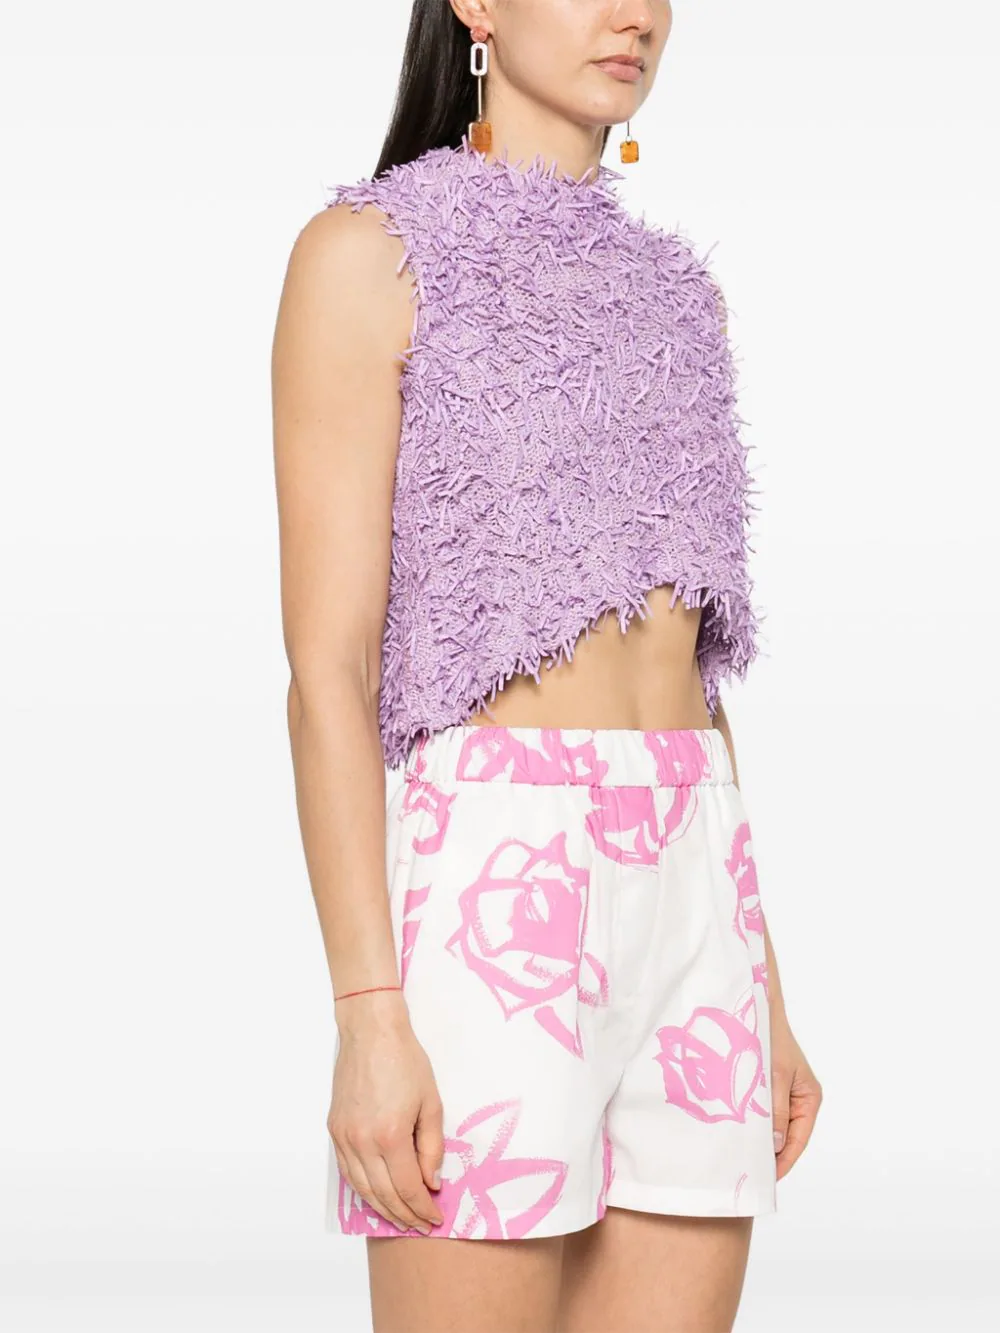 Purple Fluffy Knit Top